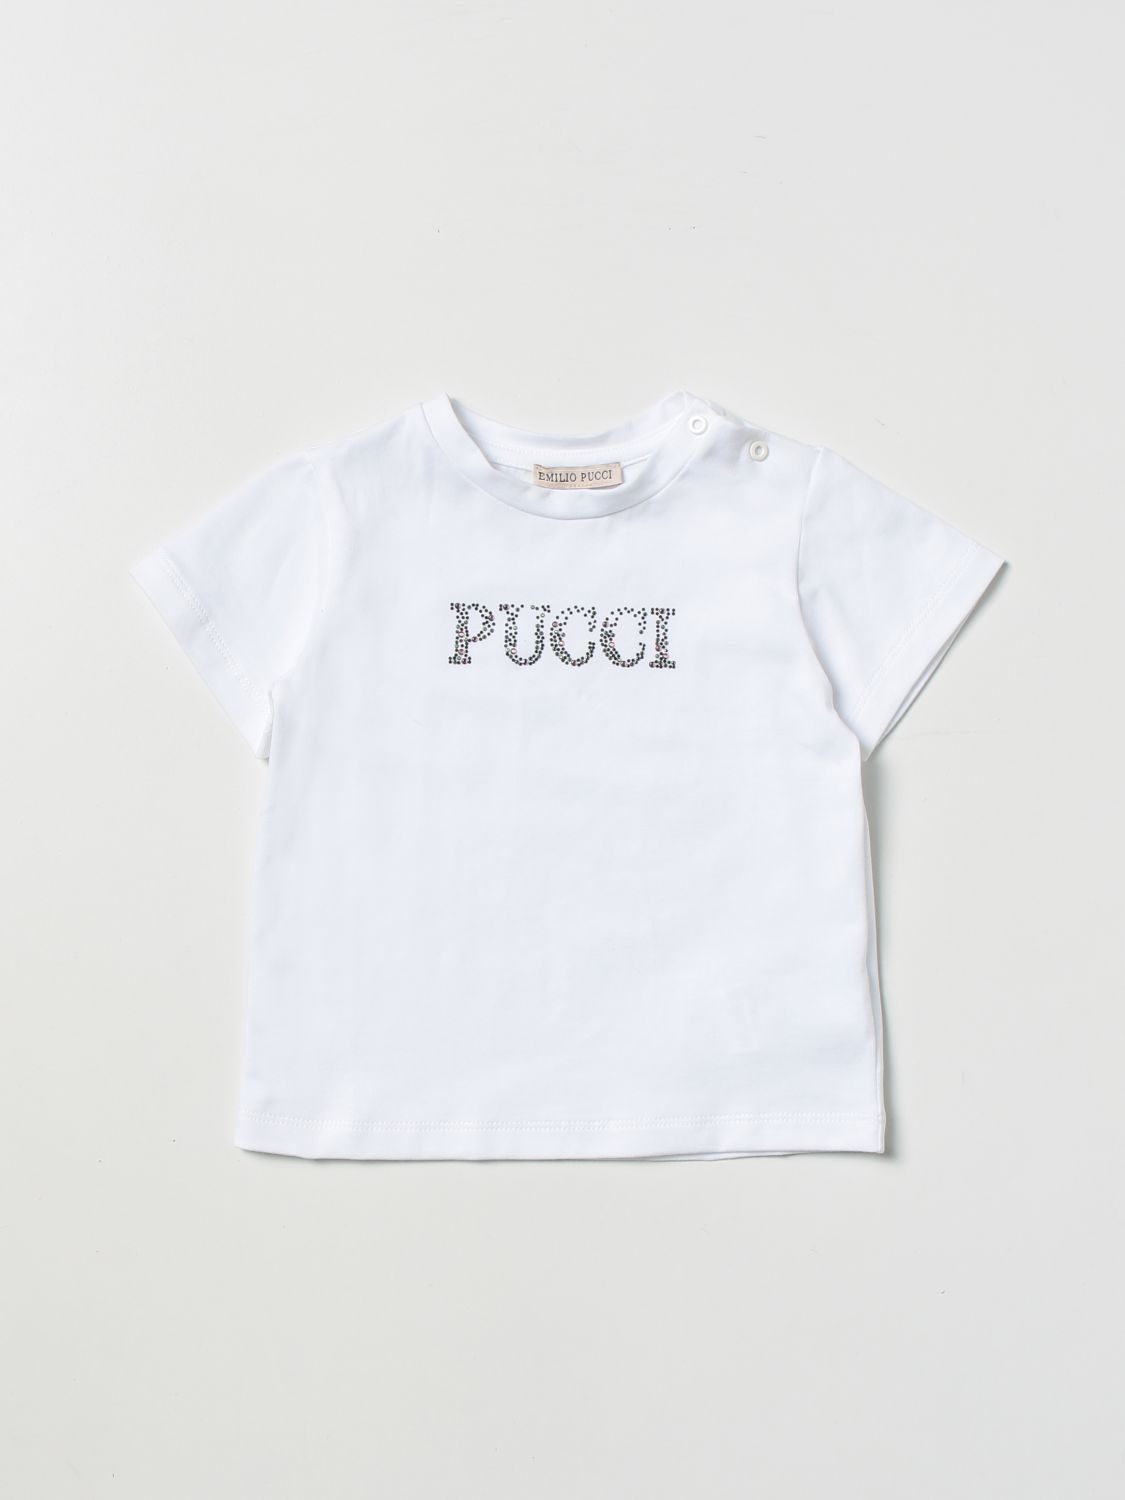 Emilio Pucci Custom Logo T-shirt, Hoodie - EmonShop - Tagotee